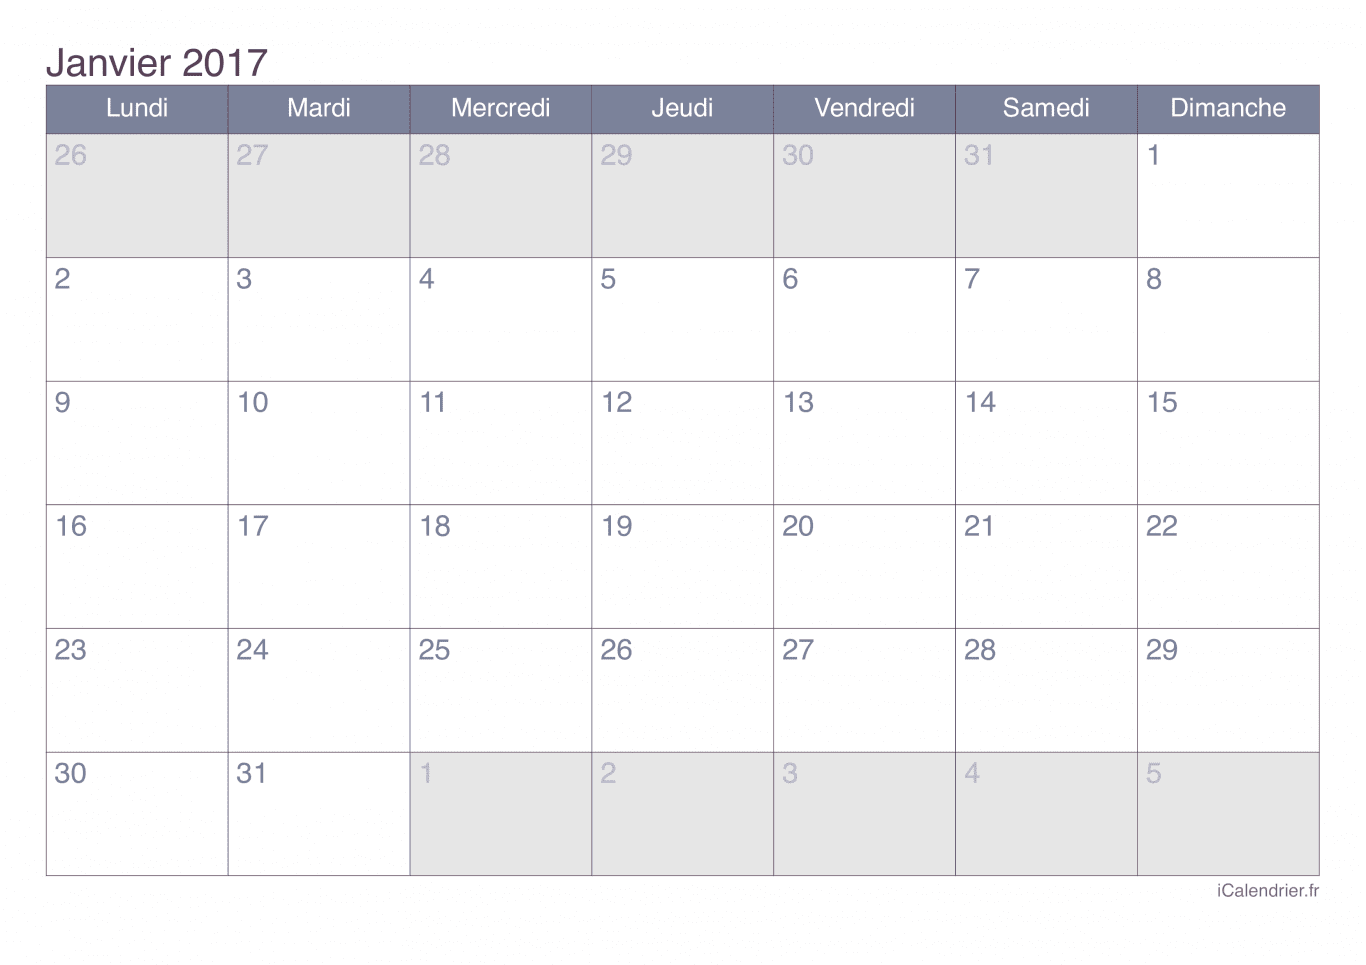 Calendrier de janvier 2017 - Office